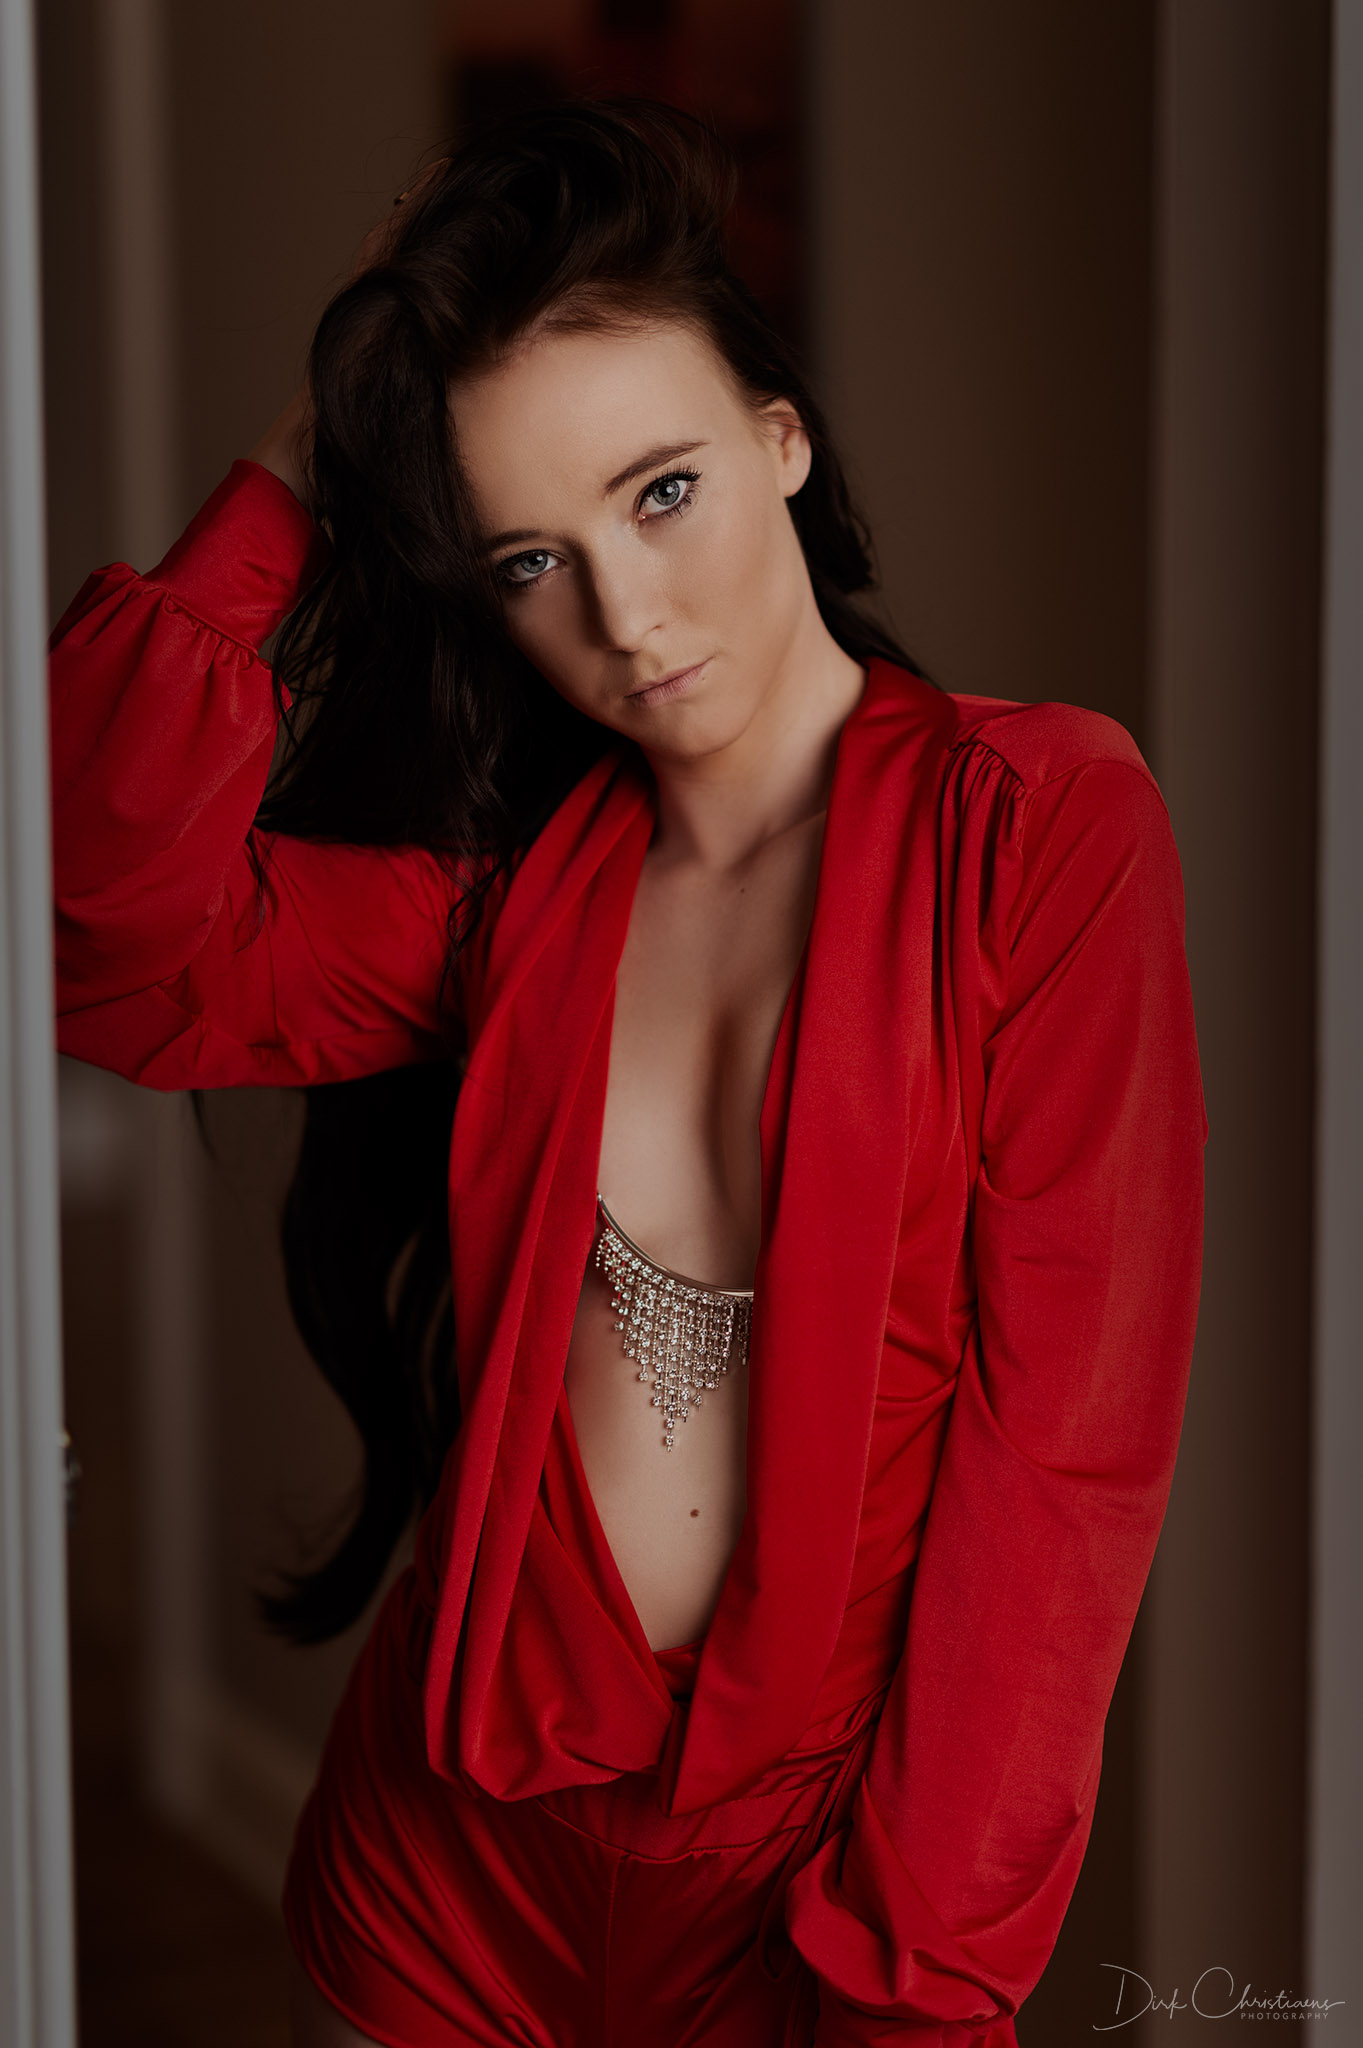 Jill Dewyn, model from Belgium at a boudoir photoshoot